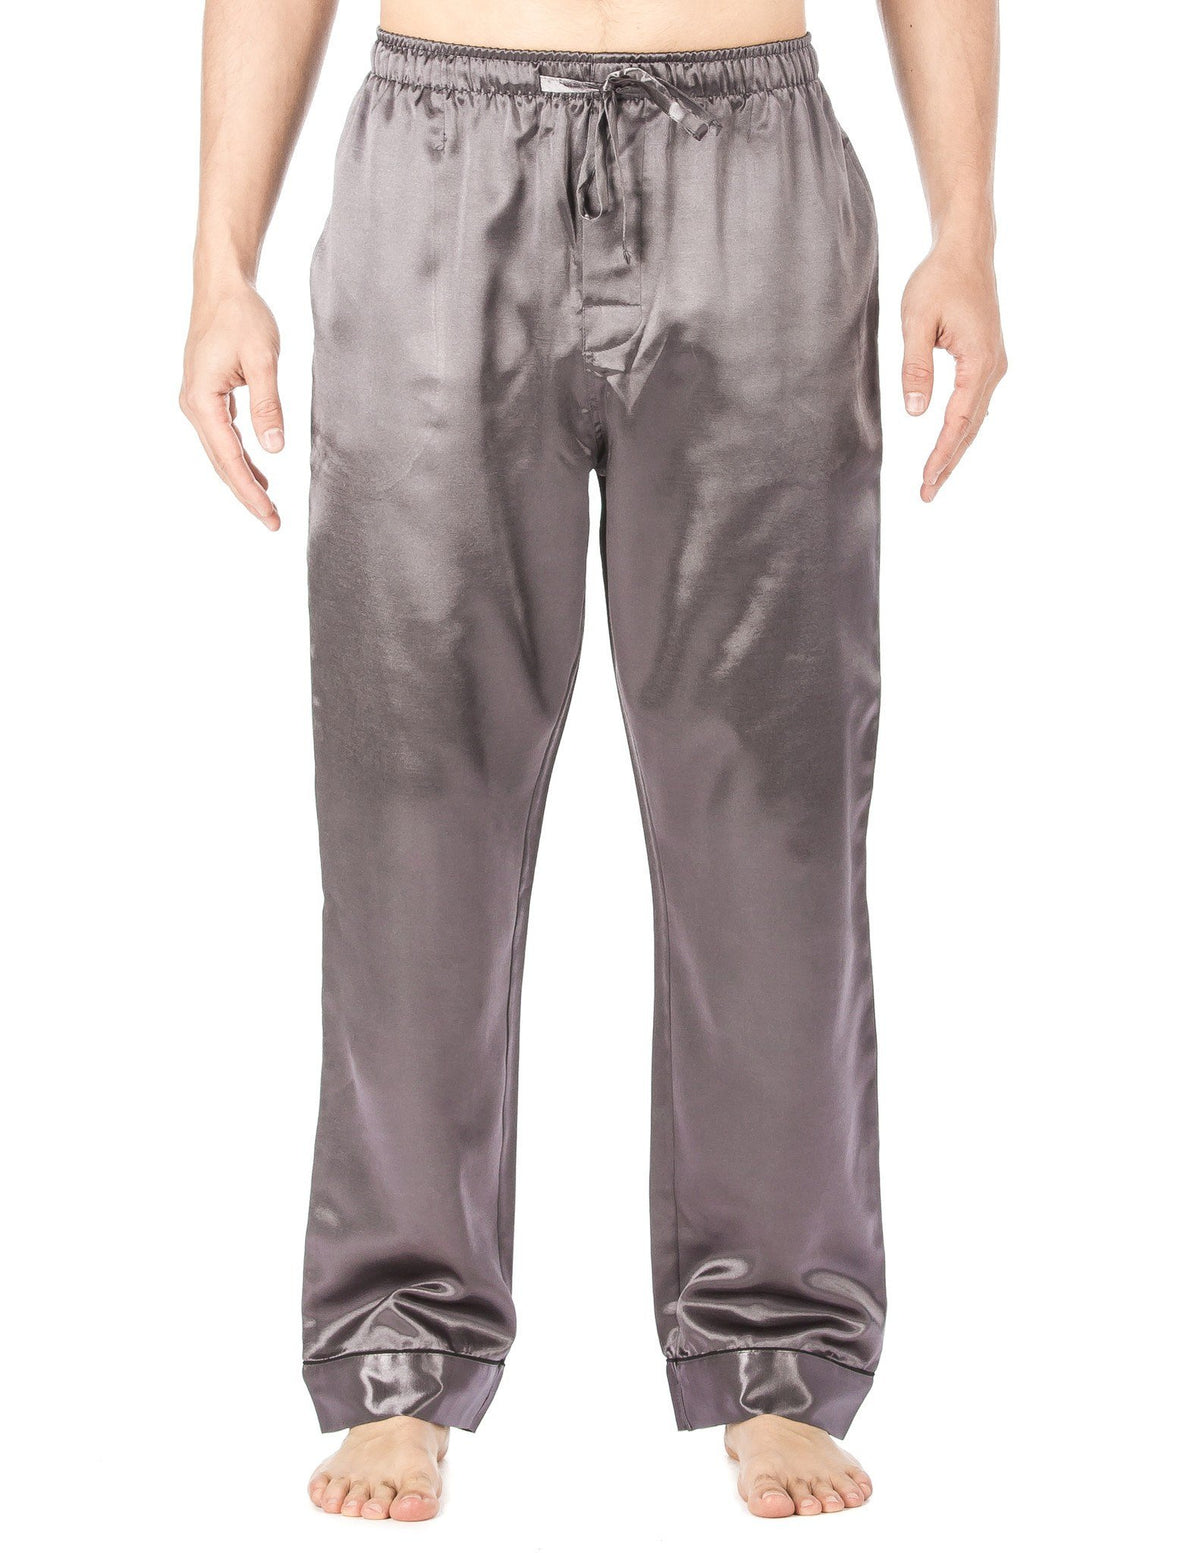 Men's Premium Satin Sleep/Lounge Pants - Solid Grey